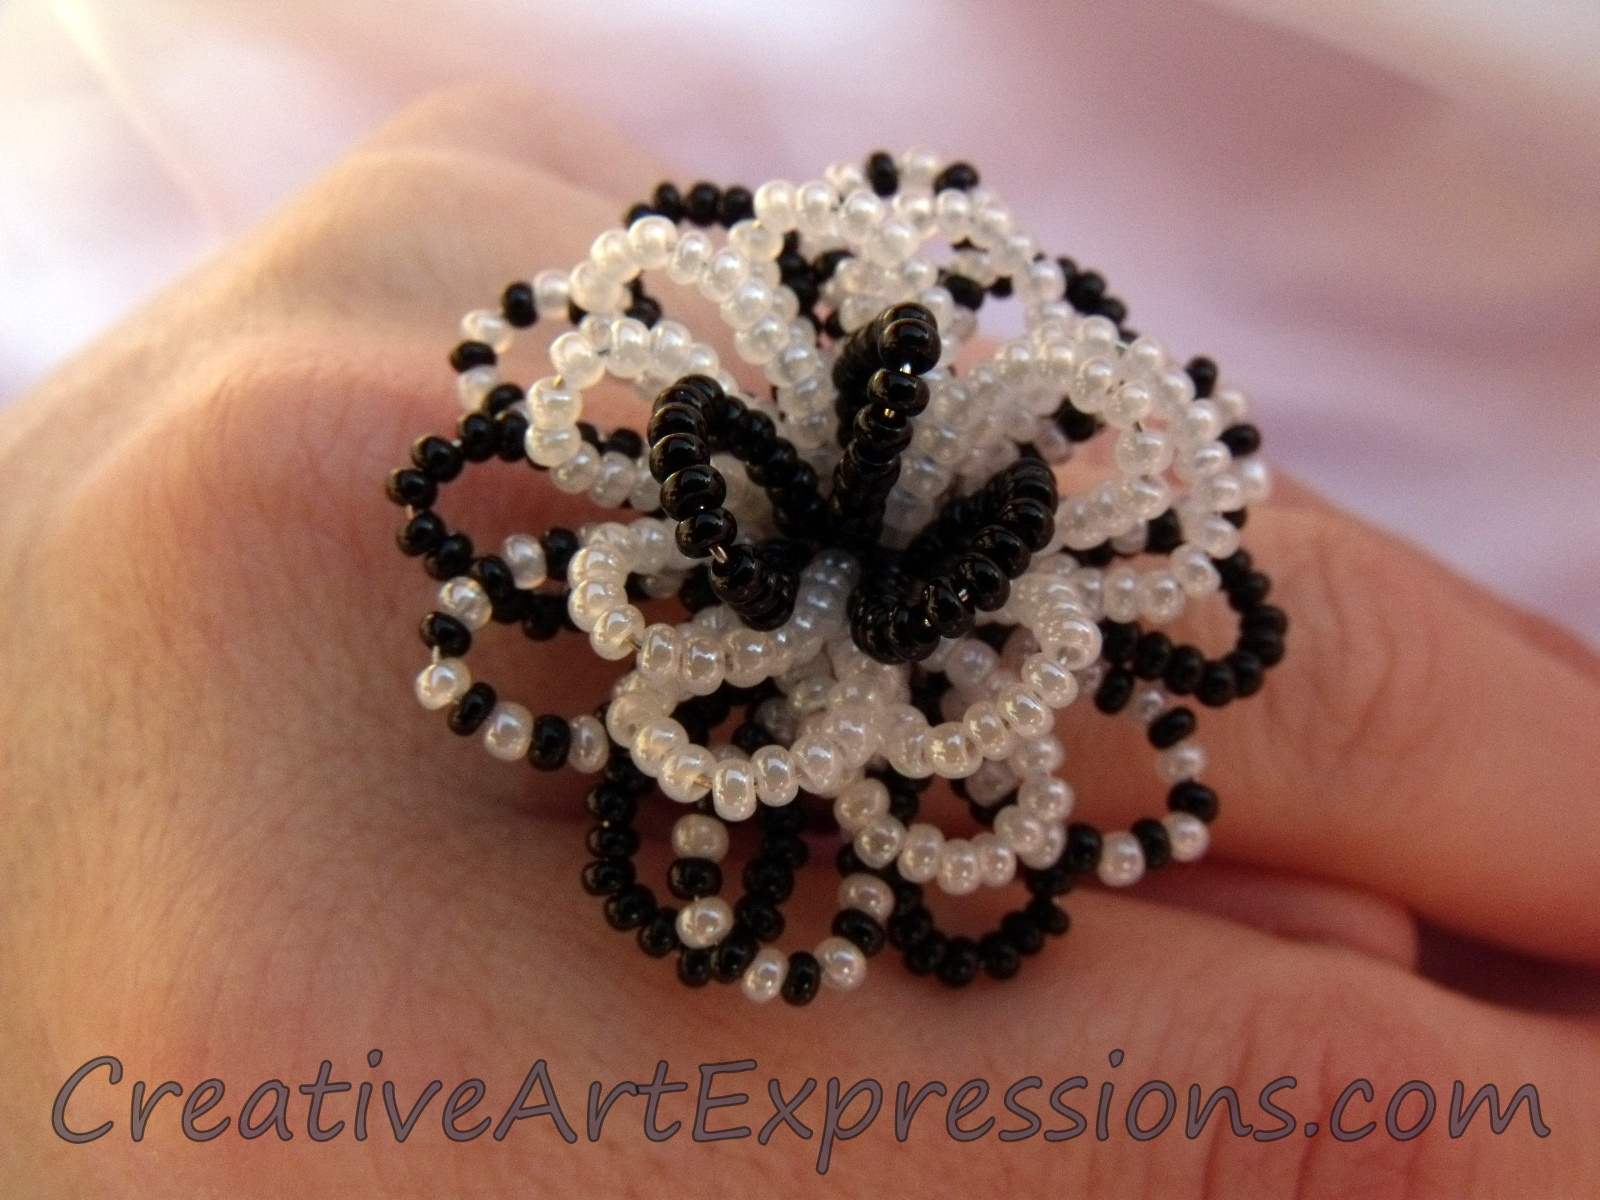 Creative Art Expressions Handmade Black & White Seed Bead Flower Ring Jewelry Design